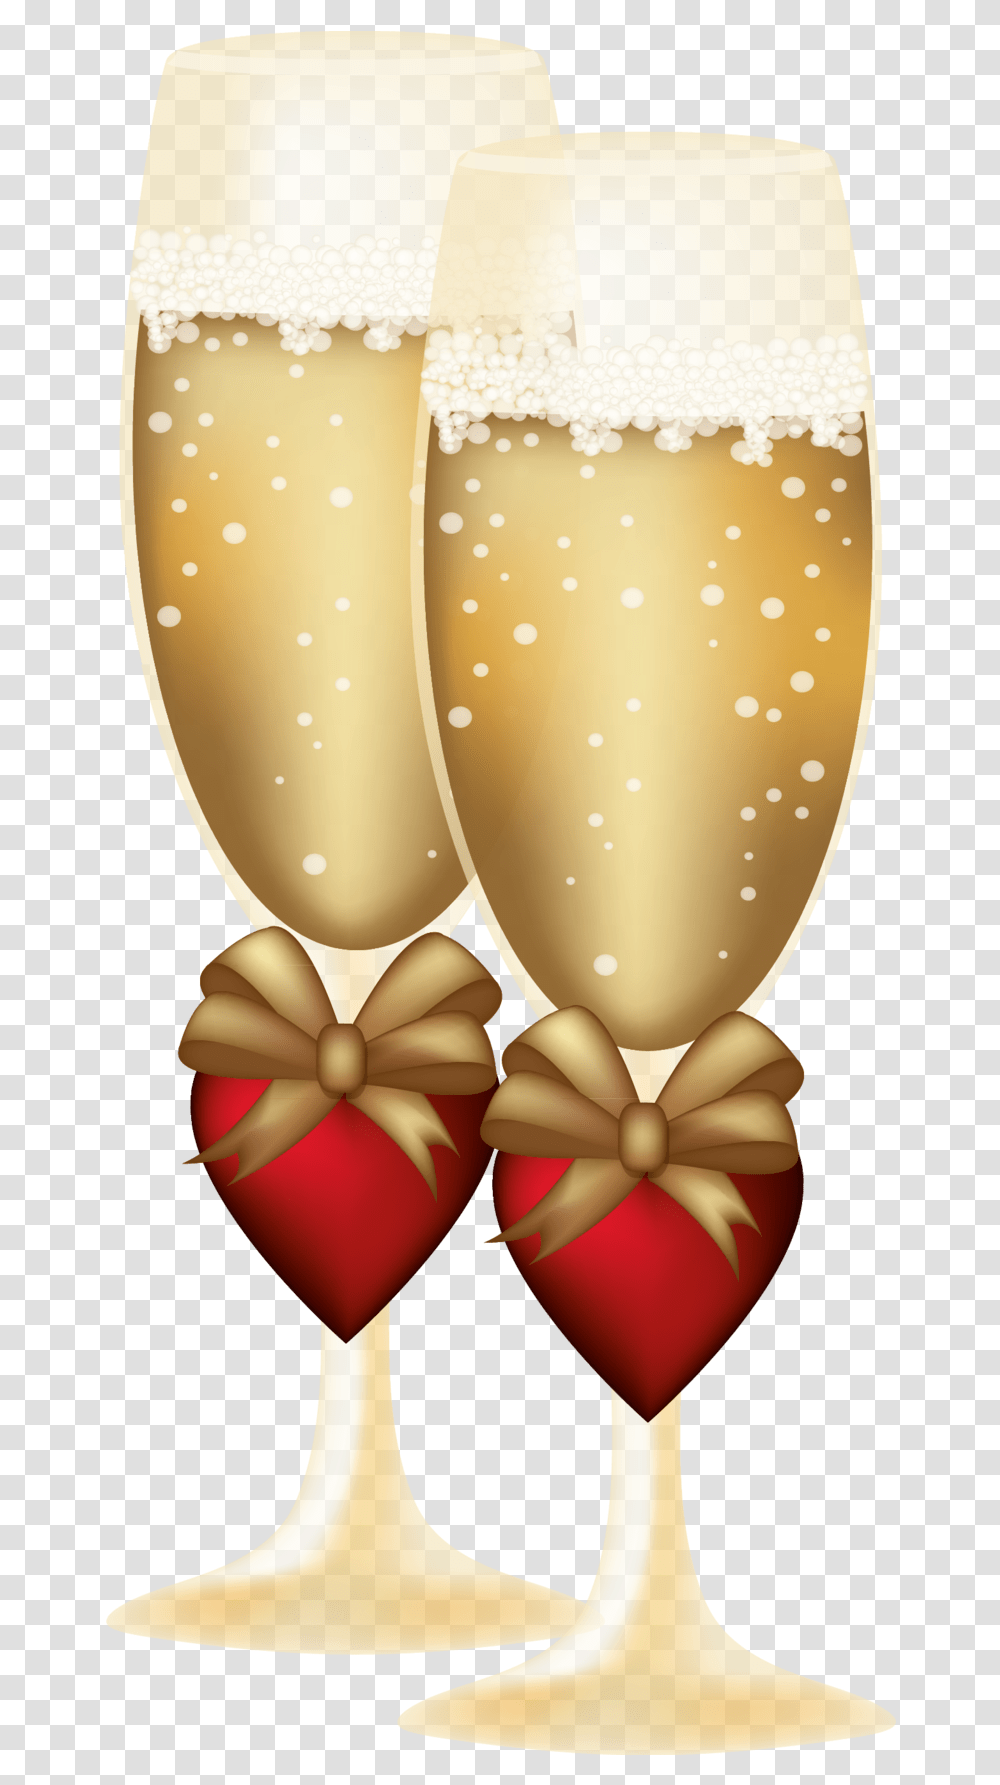 Background Wedding Champagne Glasses Saint Valentin Fete Des Amoureux, Lamp, Gold, Gift, Trophy Transparent Png